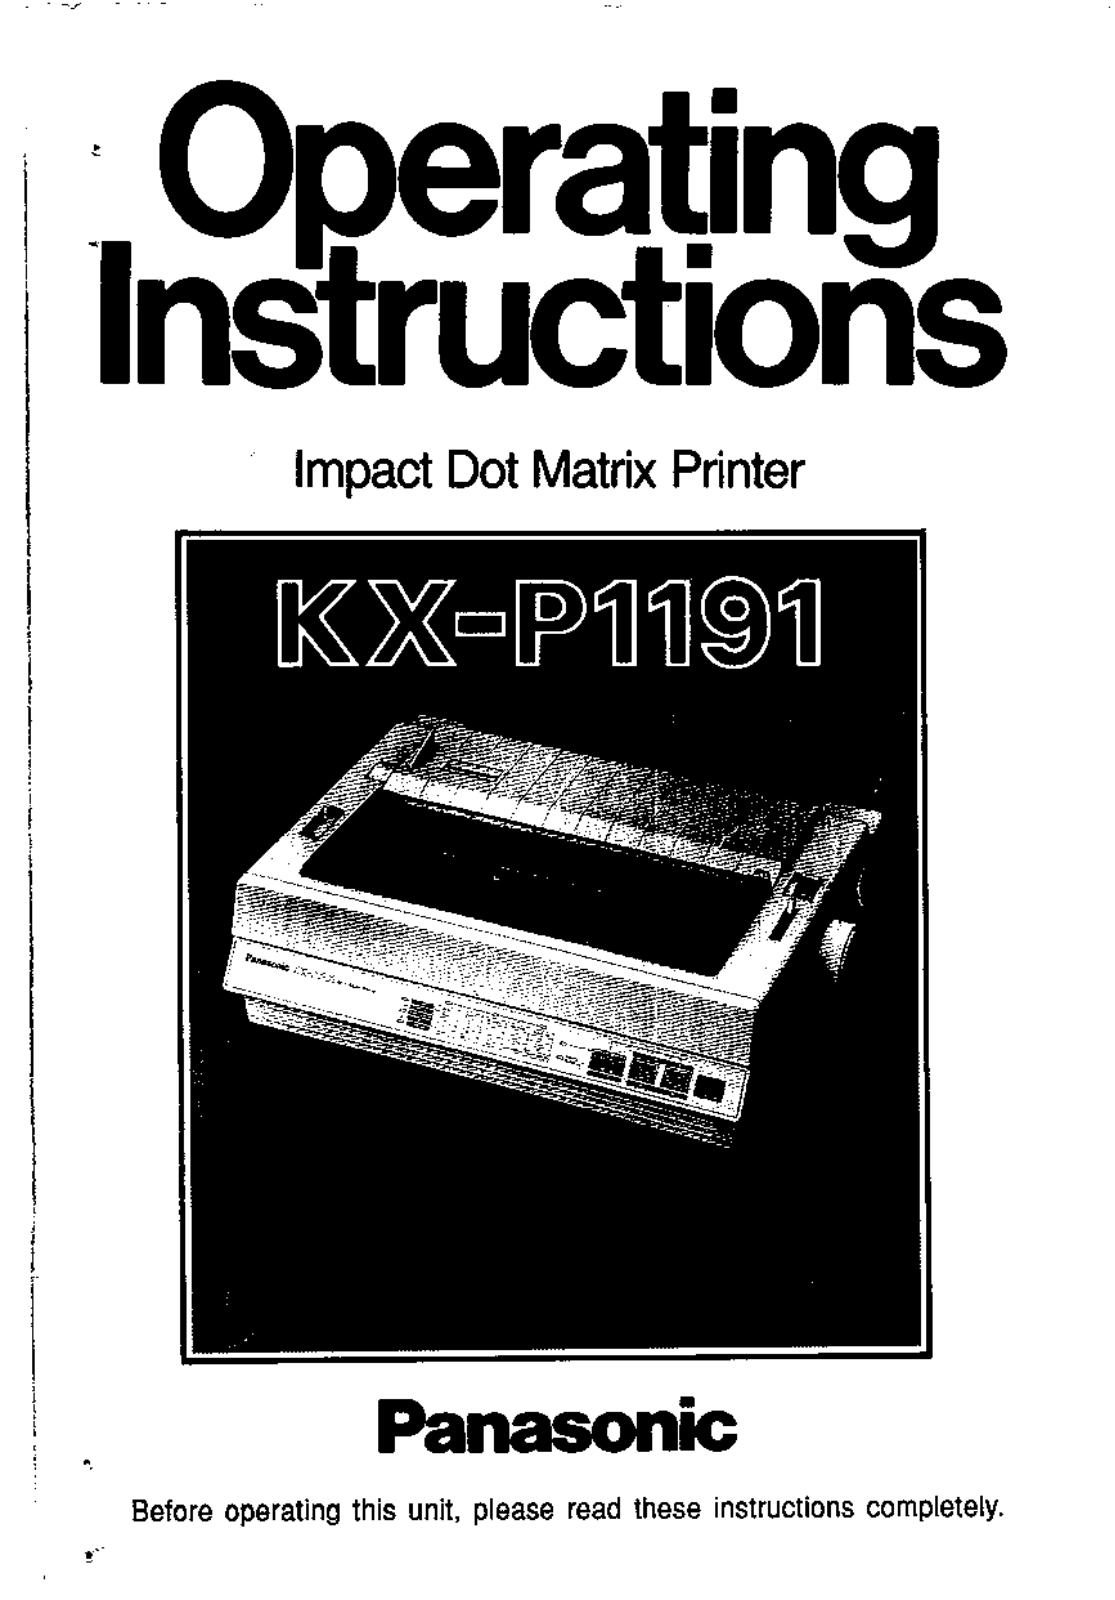 Panasonic kx-p1191 Operation Manual